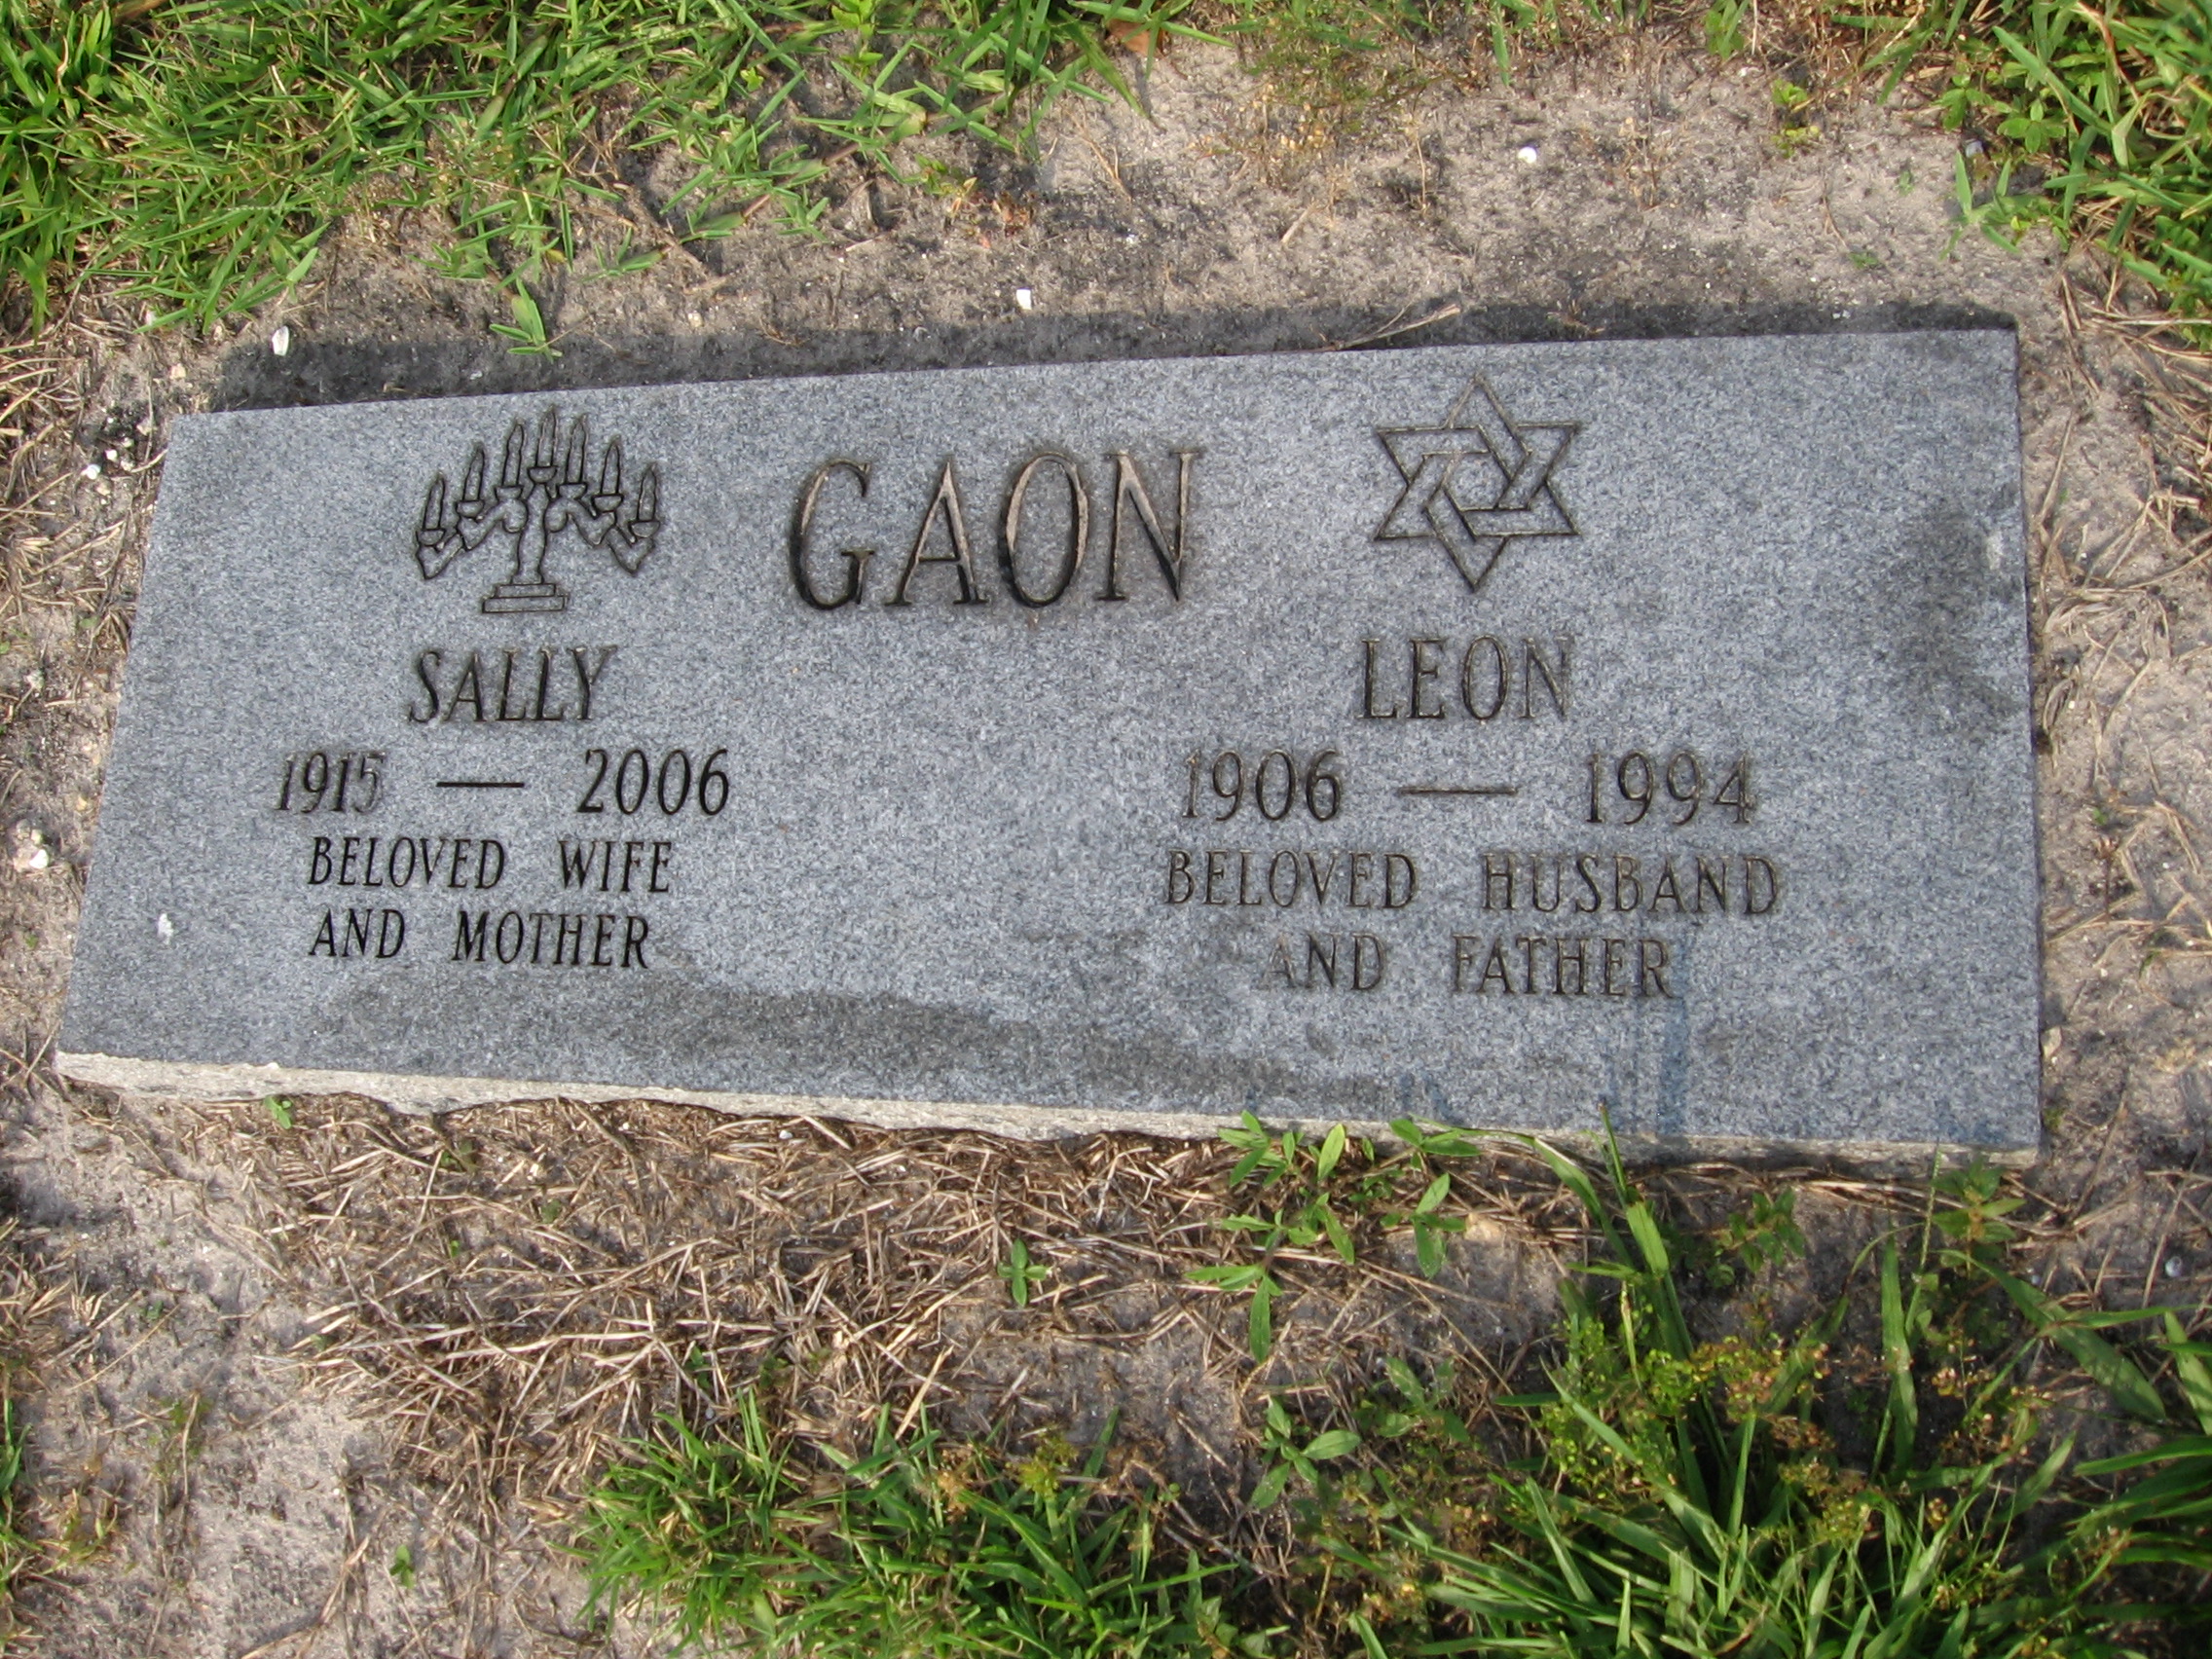 Leon Gaon